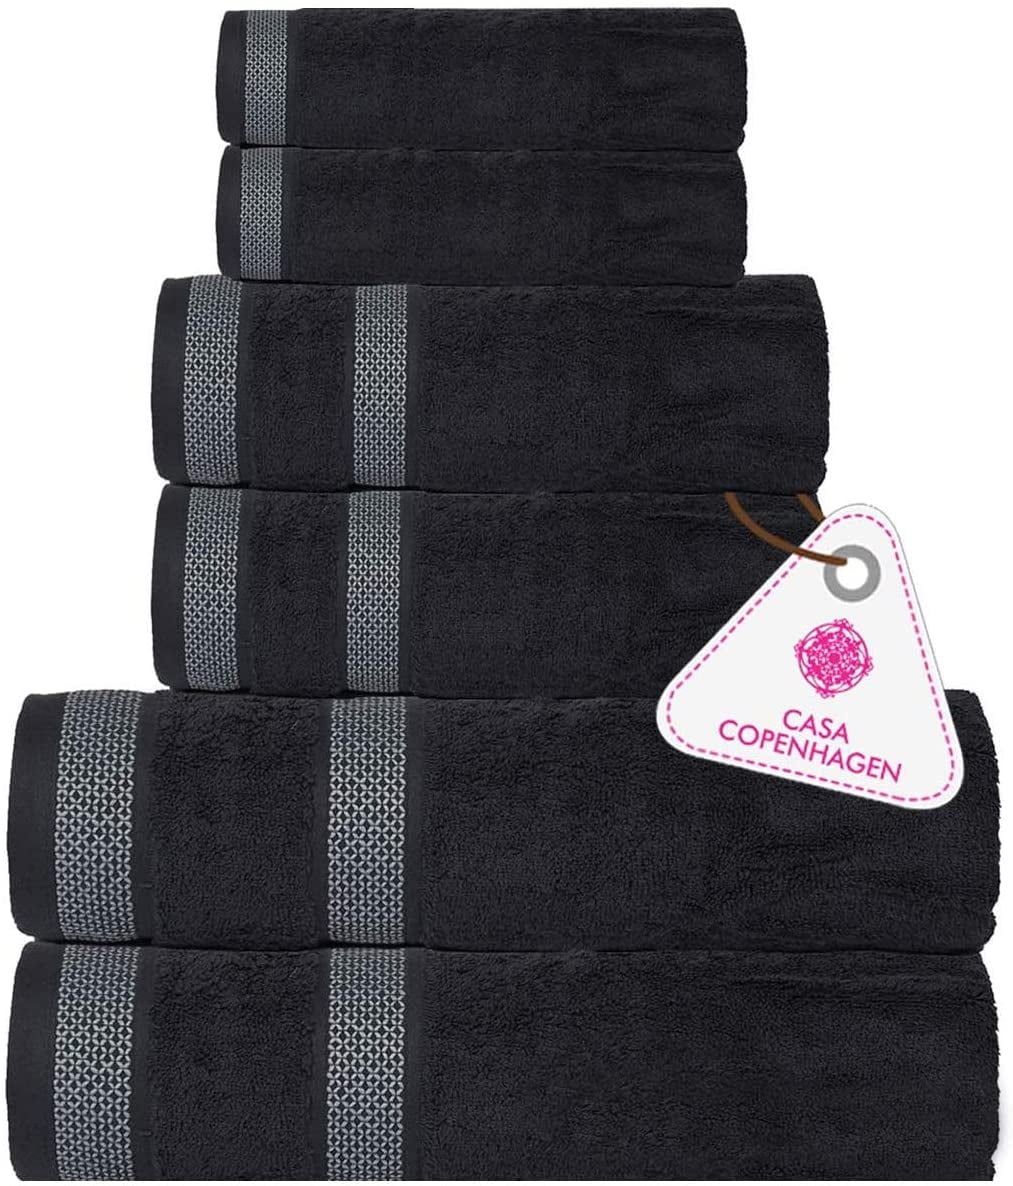 Details about   Hand Towel 1Pc 100% Cotton Towel For Adult Plaid Towel Face Care Plaid Towel New 